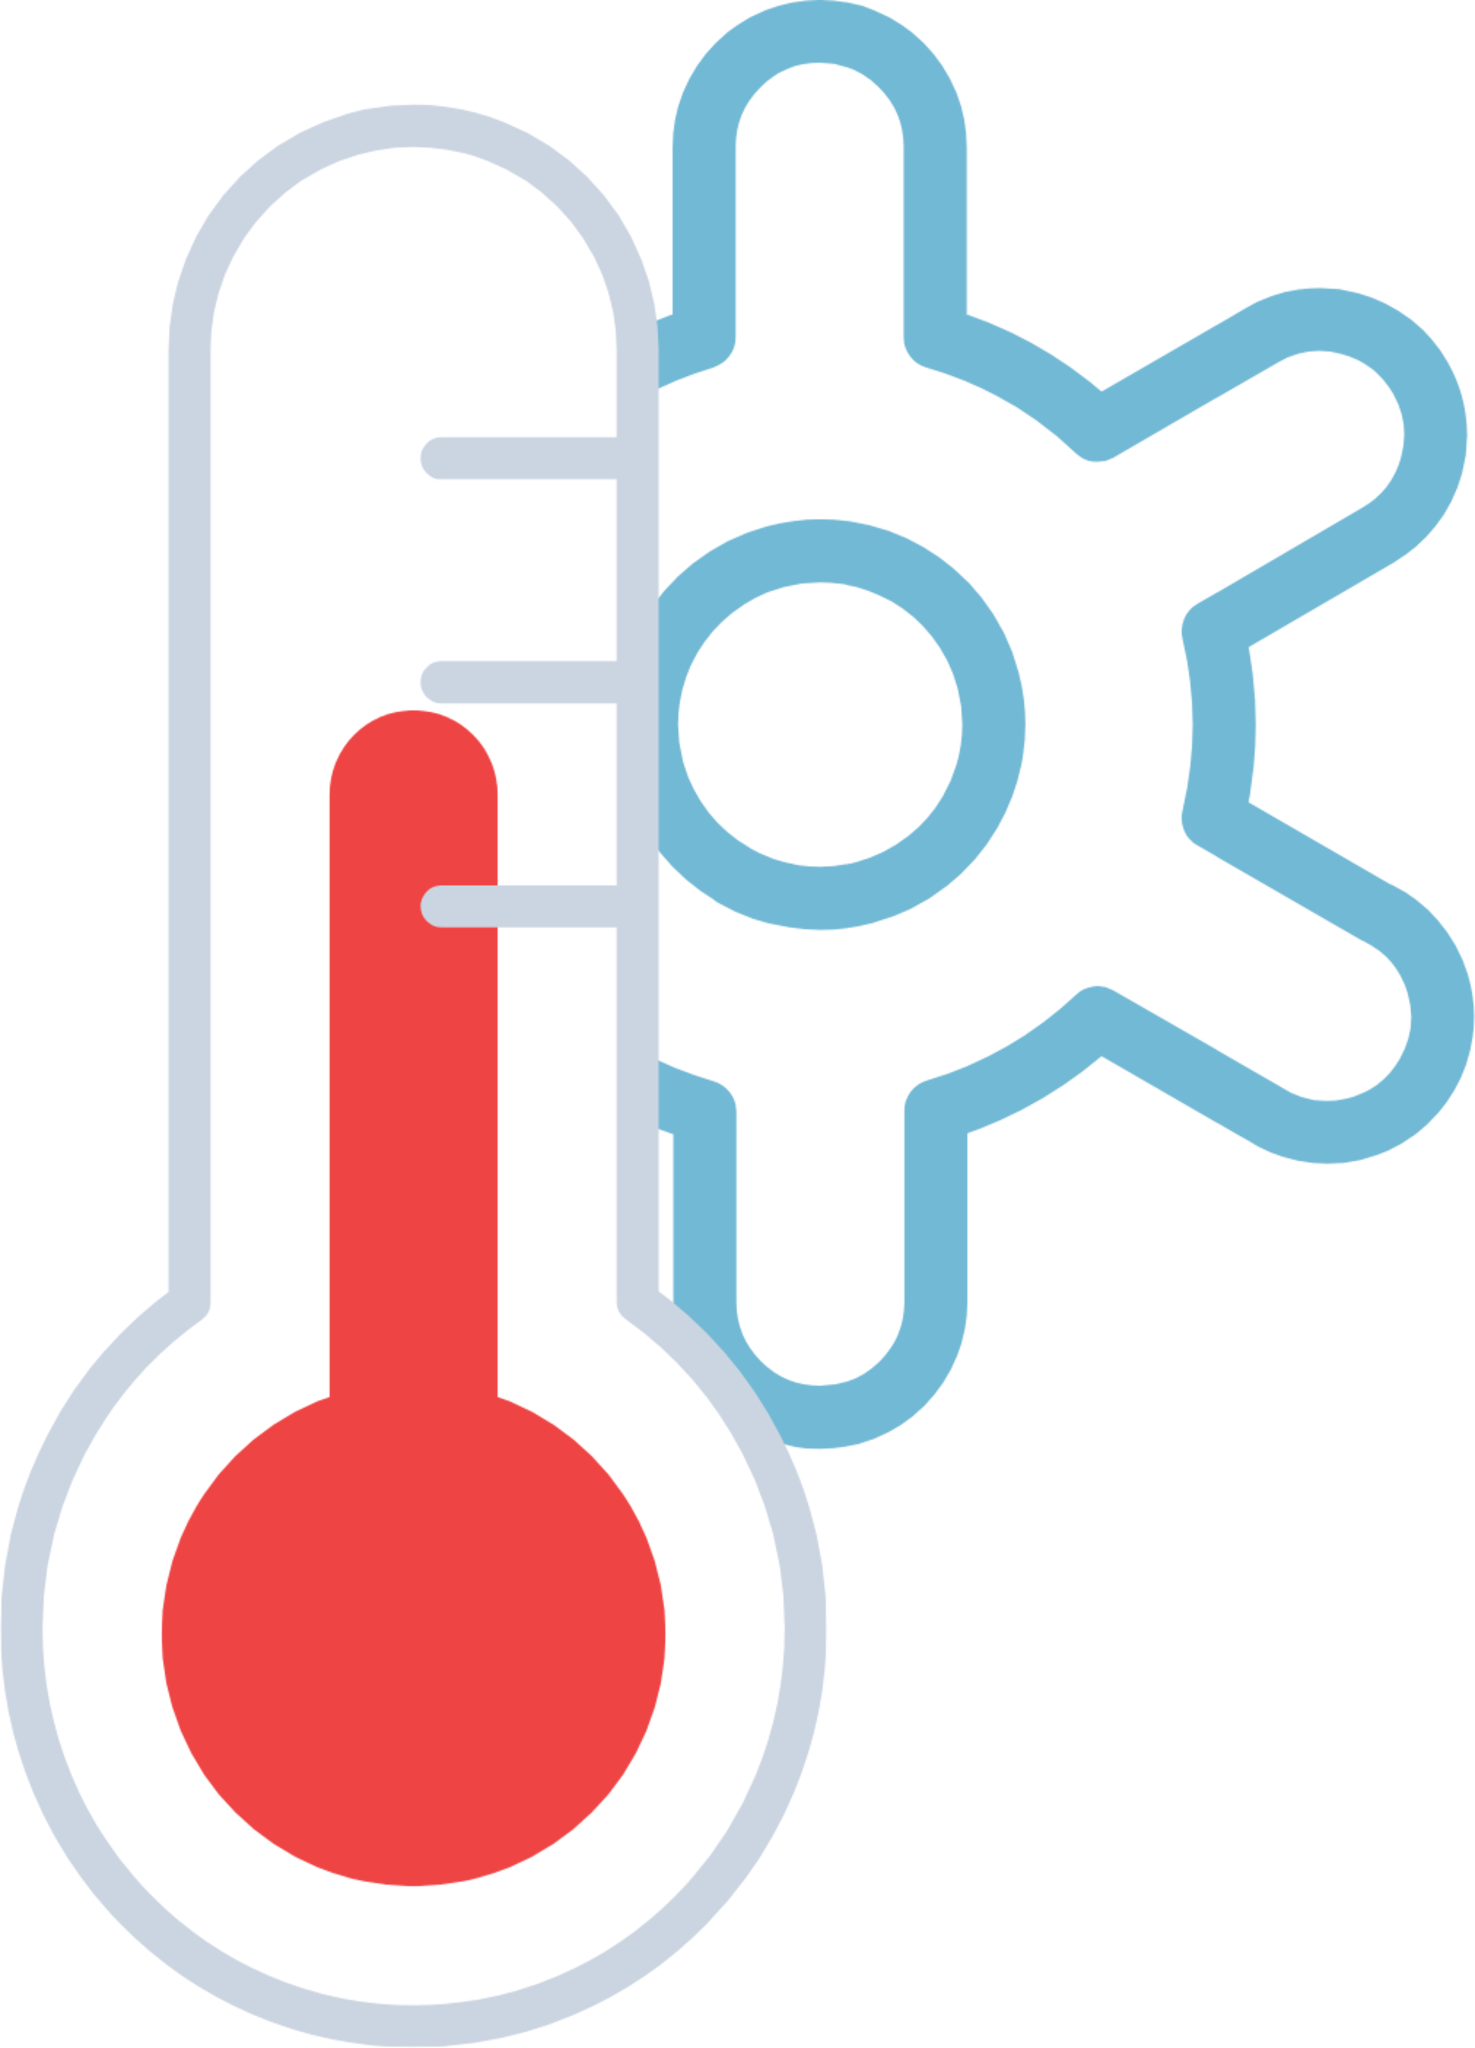 thermometer snow icon